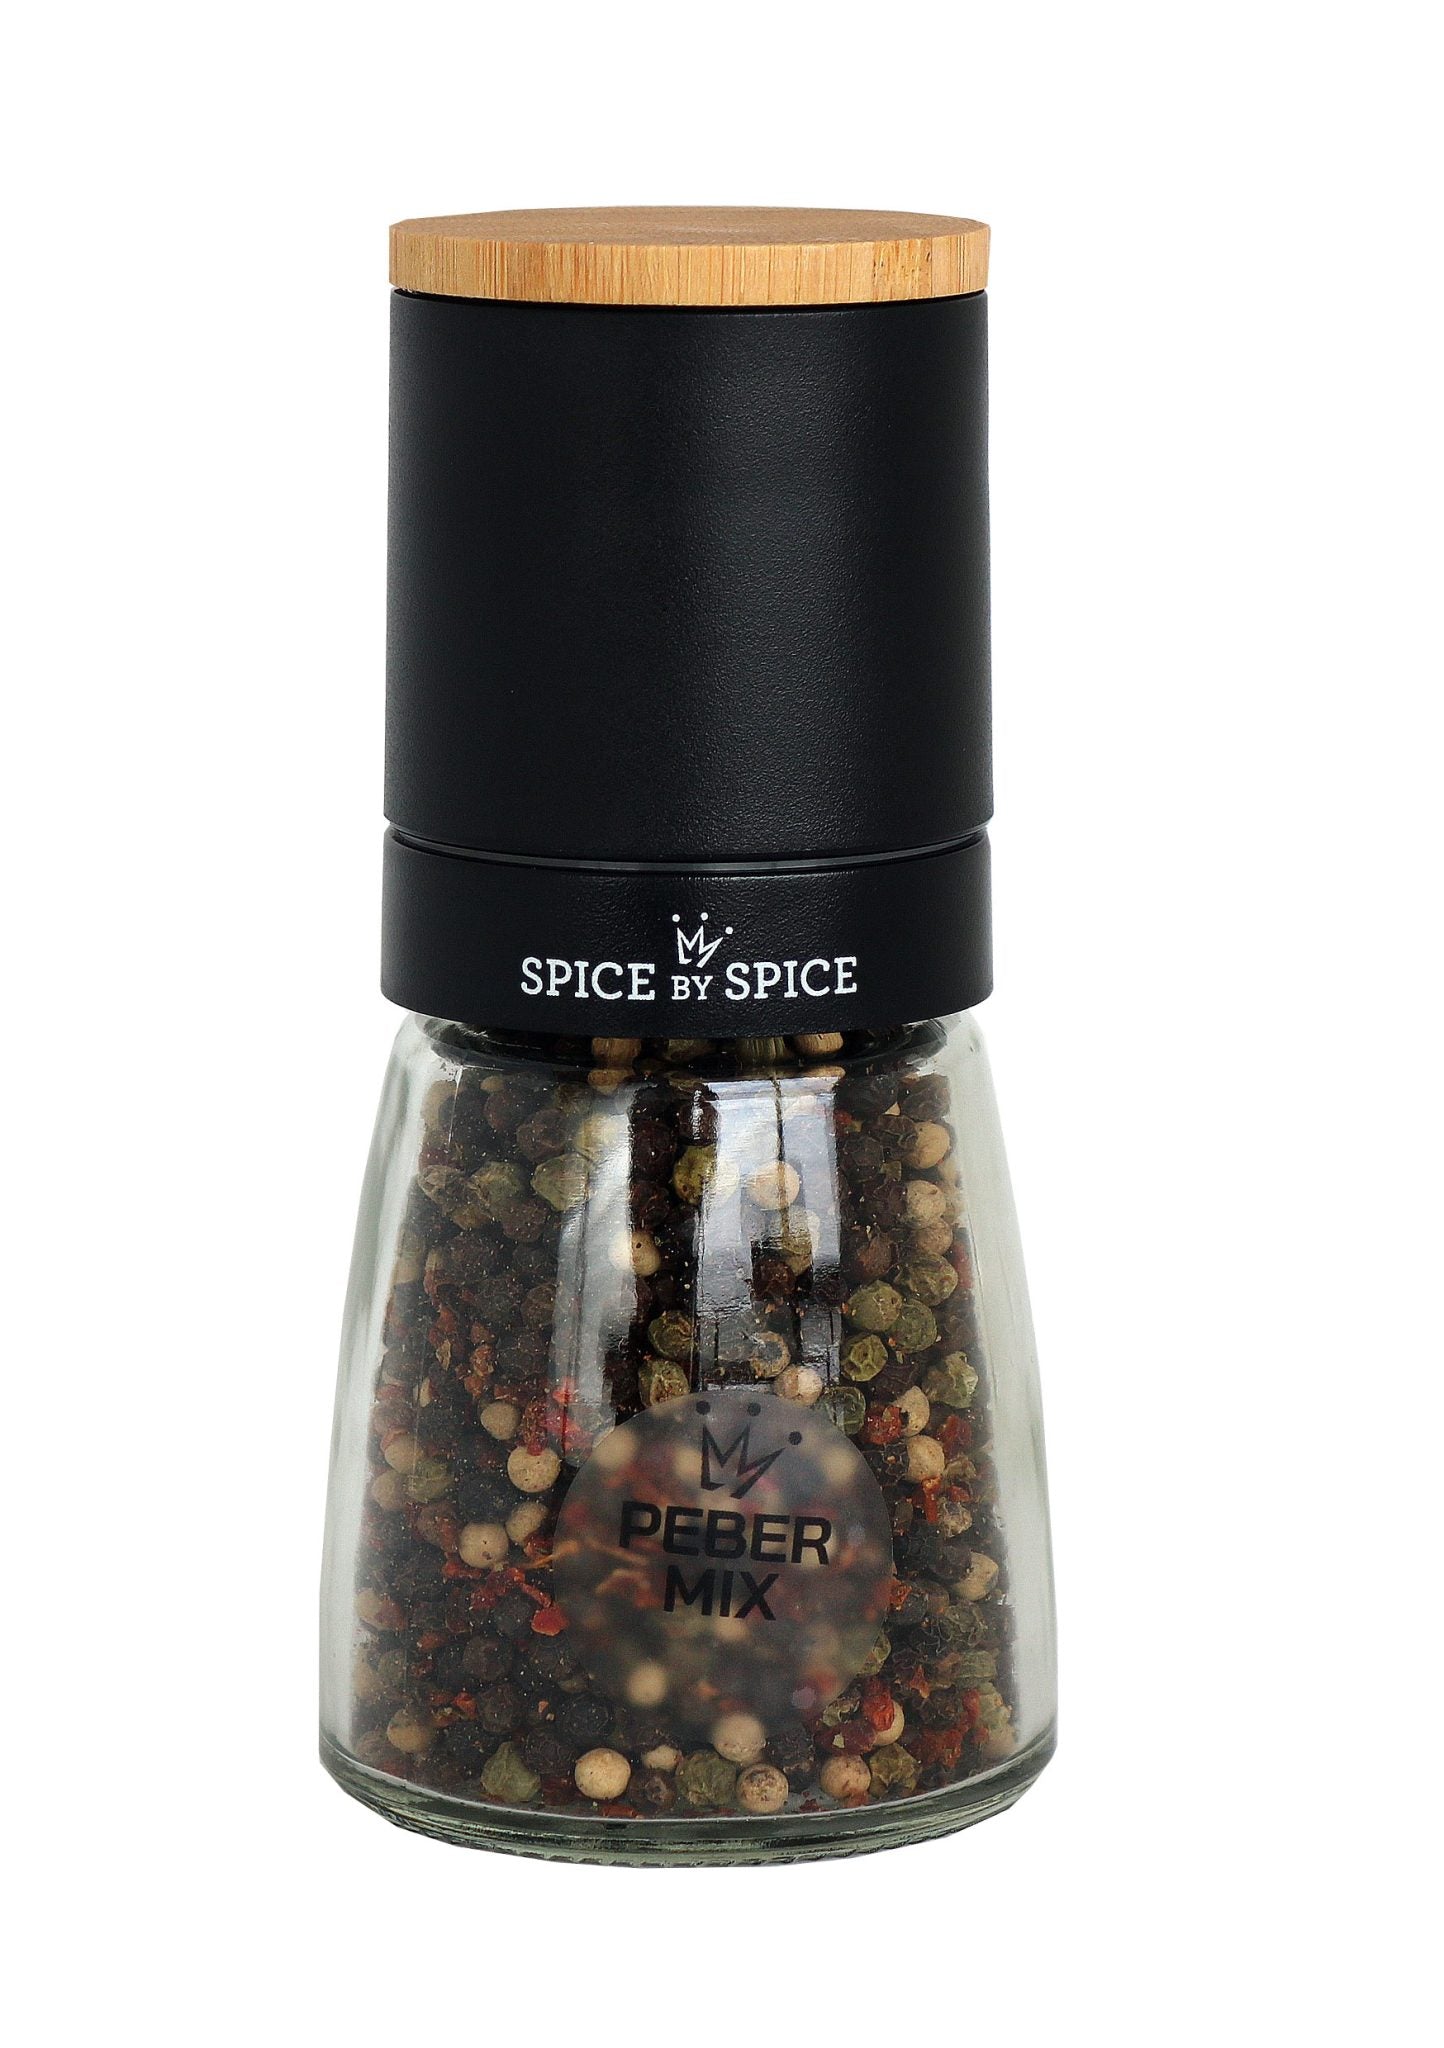 Spice by Spice, Pepper Mix - Ceramic Grinder